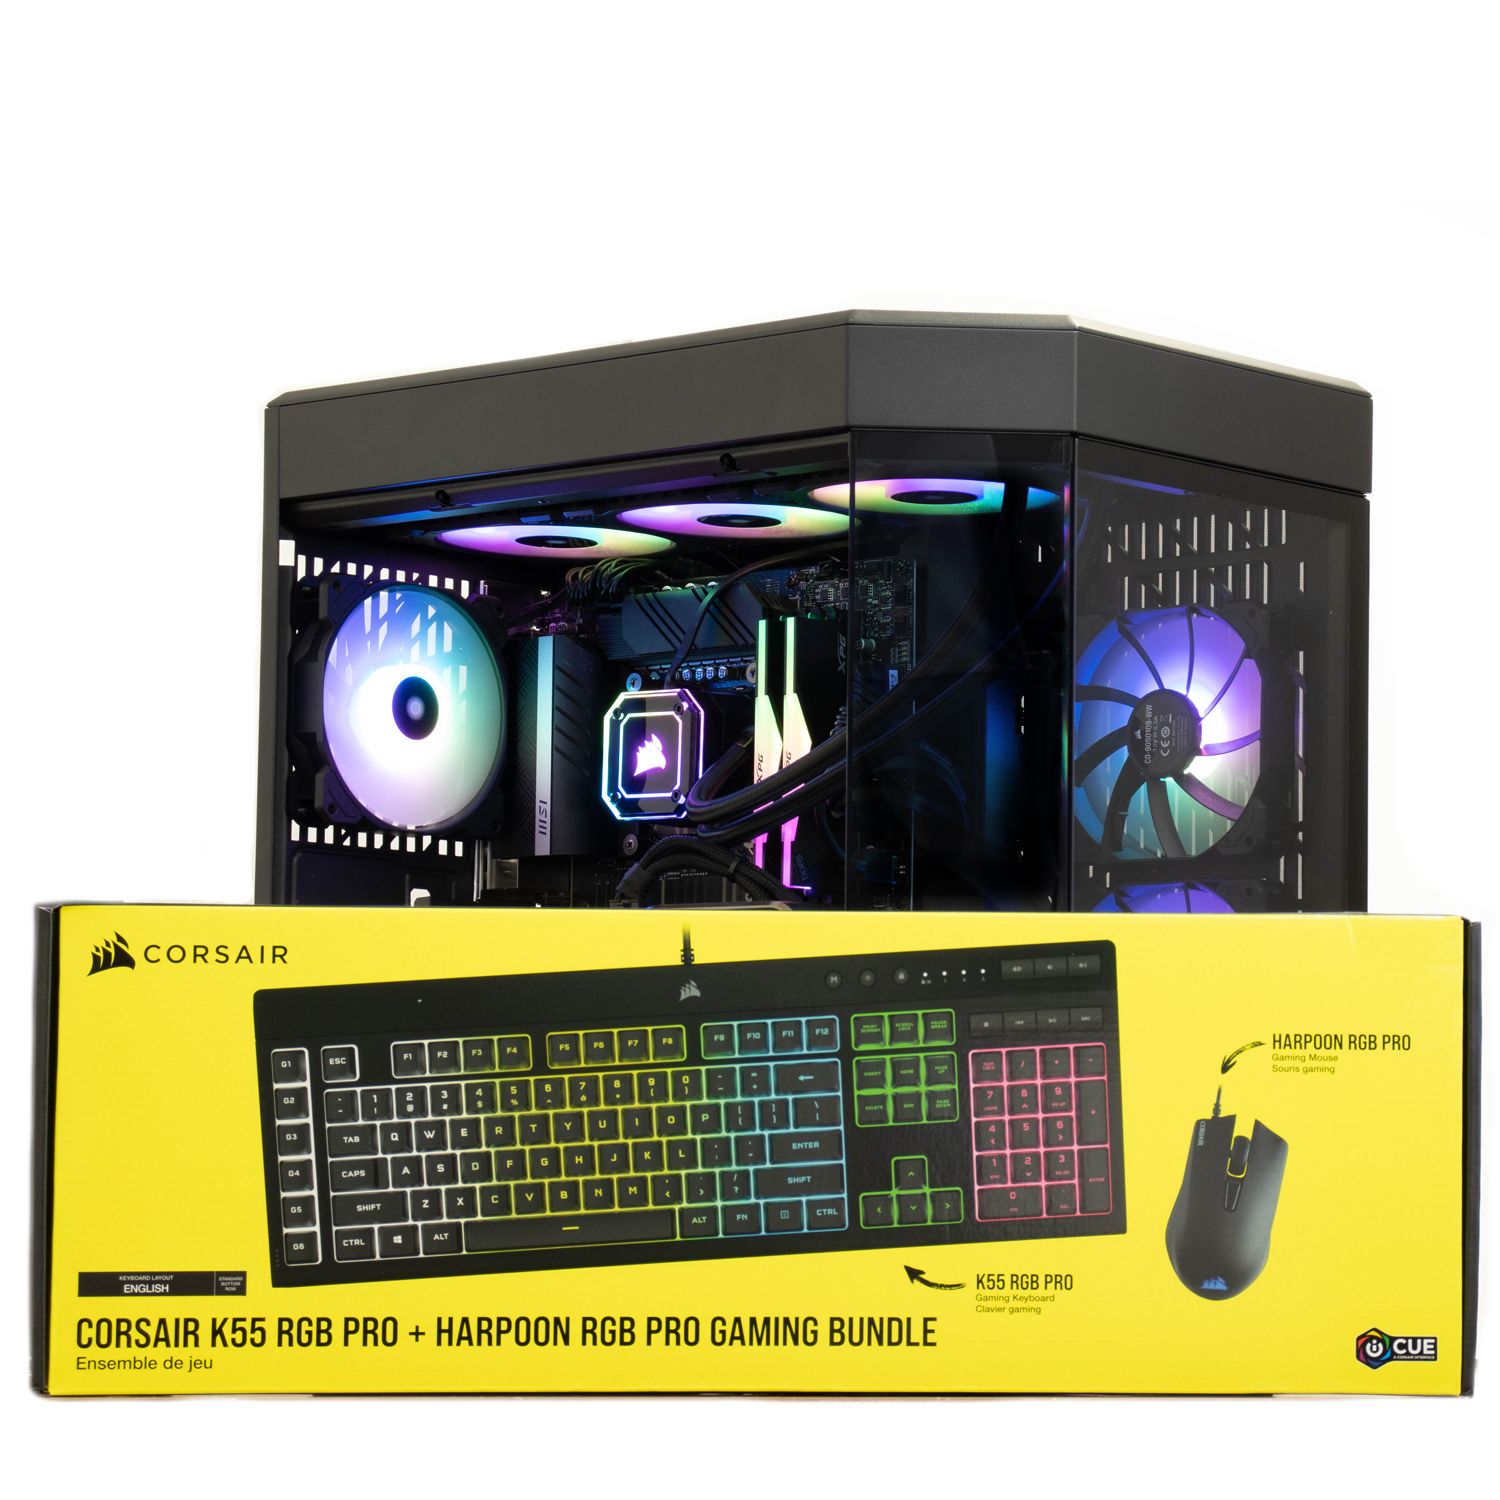 Cobratype King Cobra Legend Desktop Gaming PC - Intel Core i9-12900KF, RTX  4090, 32 GB DDR5 RAM, 2 TB NVMe, AIO Liquid Cooler, Windows 11 Pro 